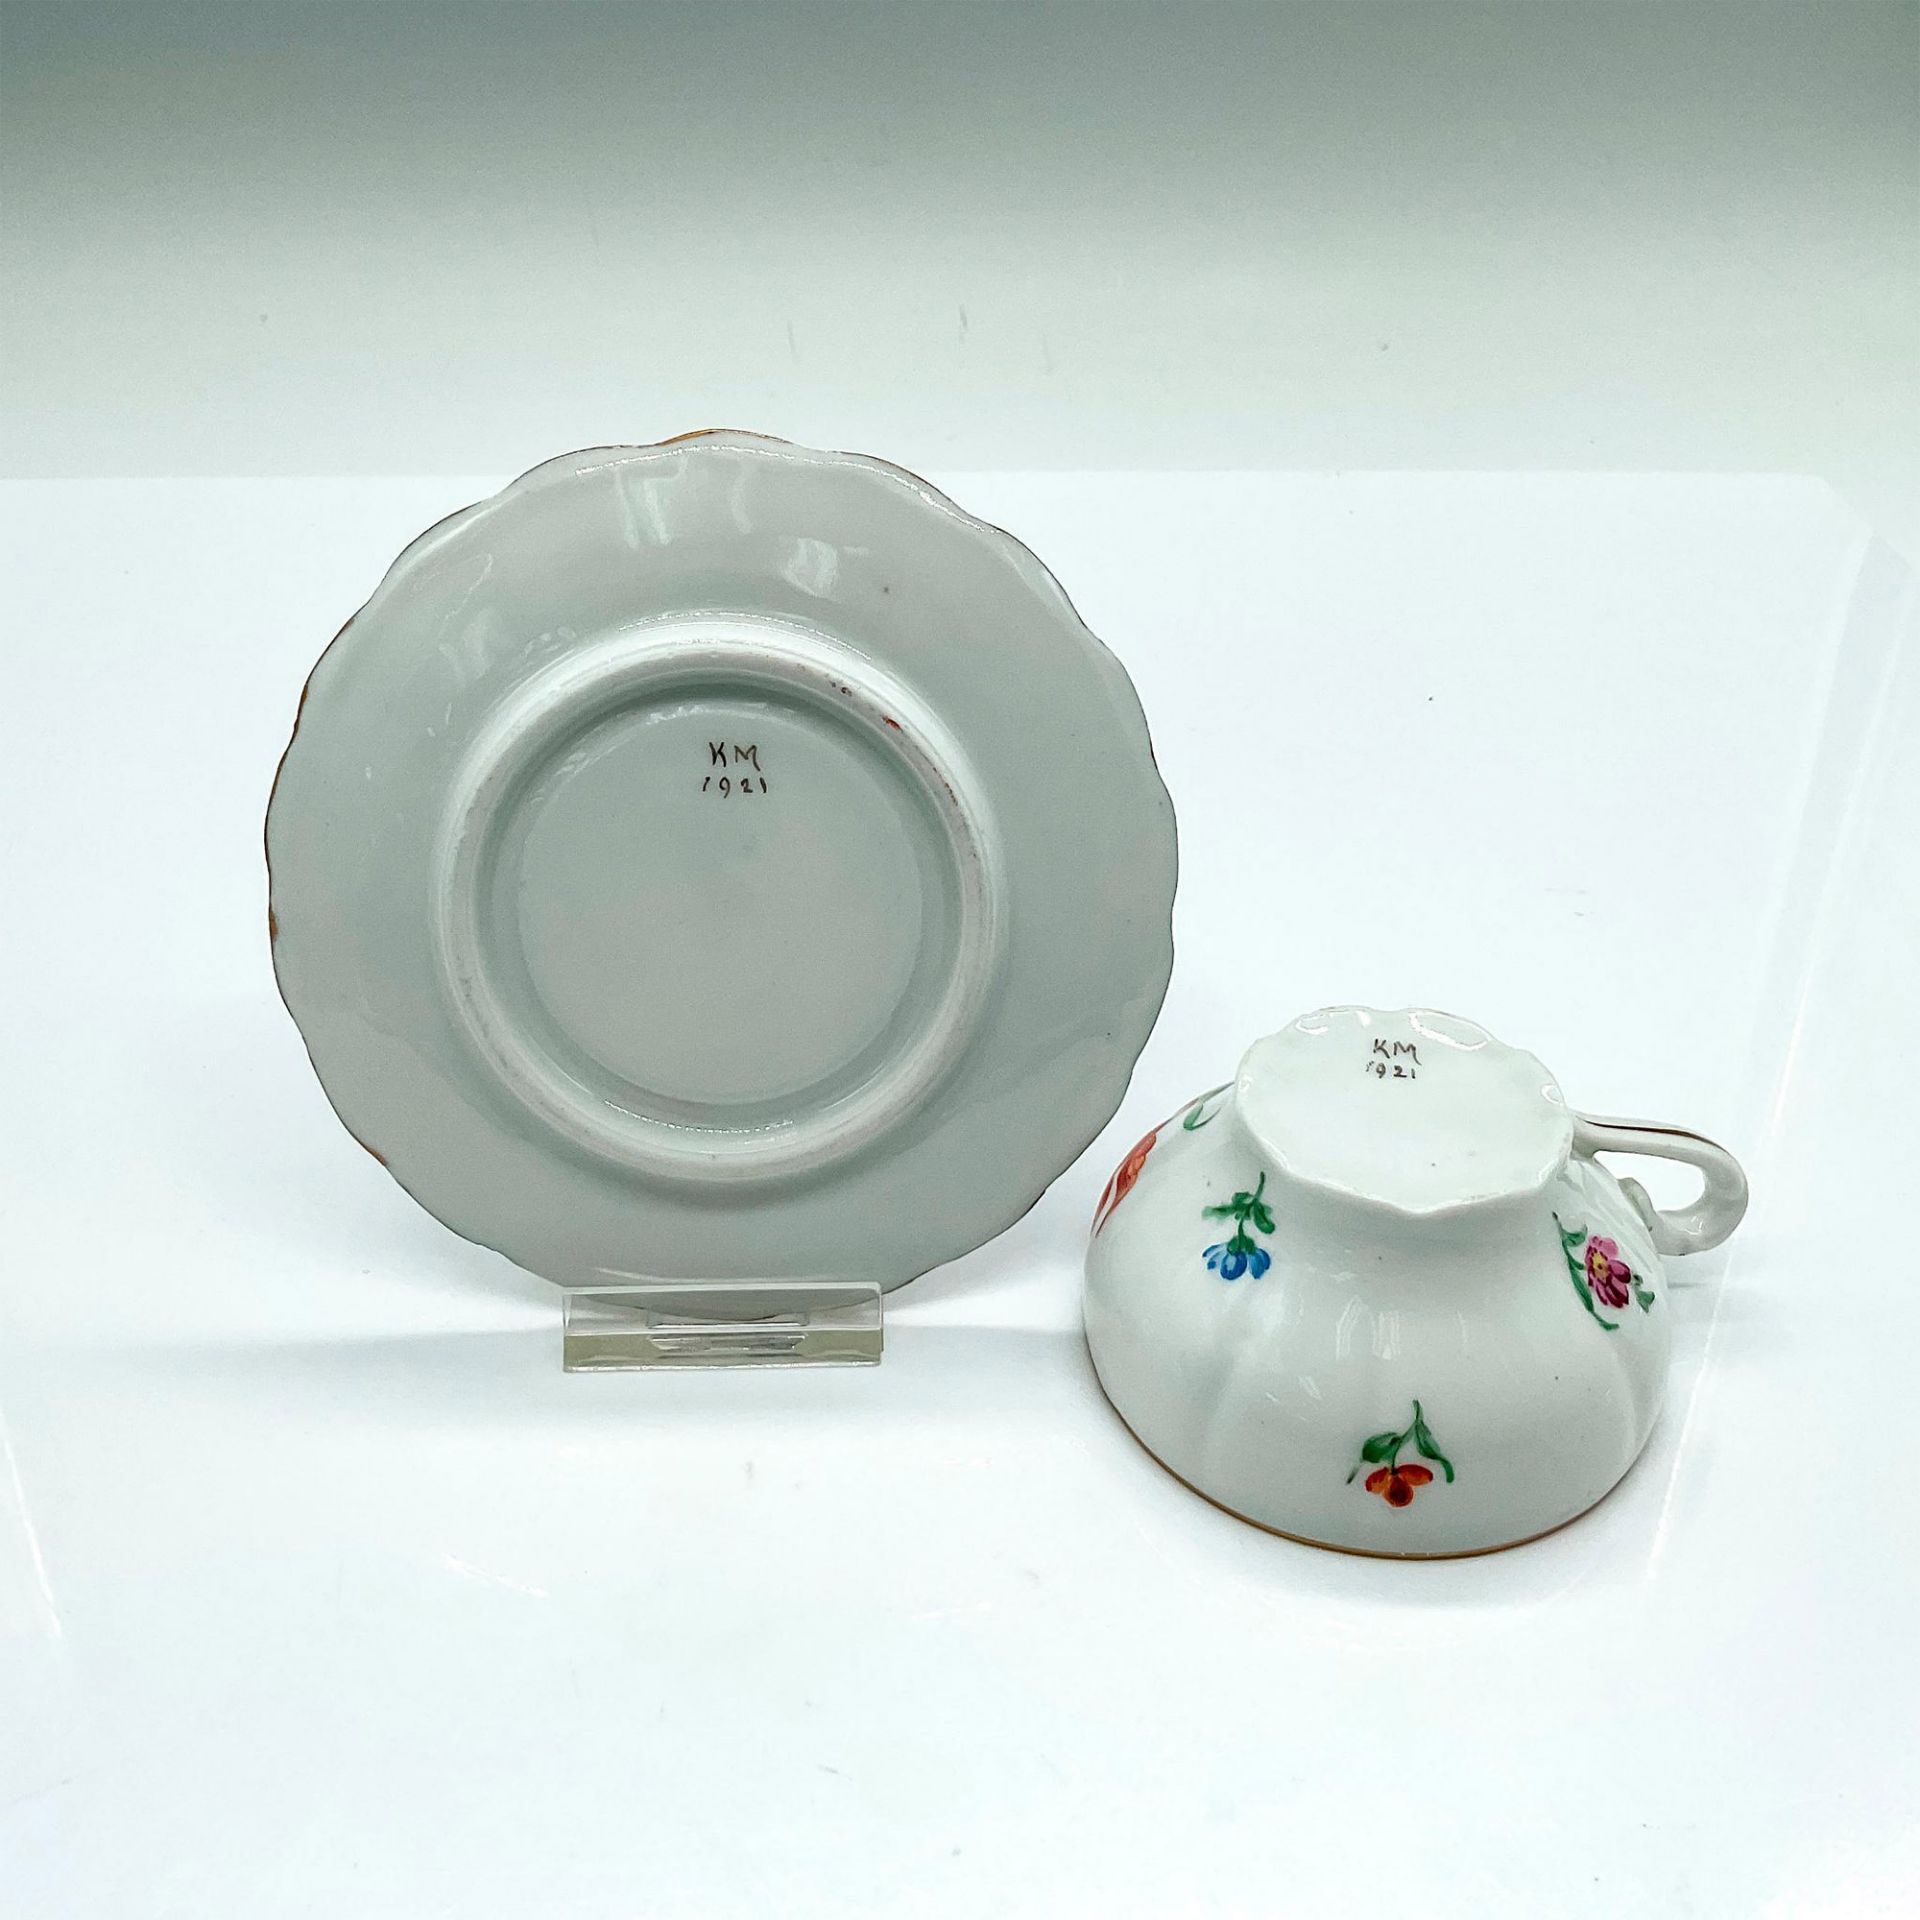 Antique KM Porcelain Floral Cup and Saucer Set - Image 4 of 4